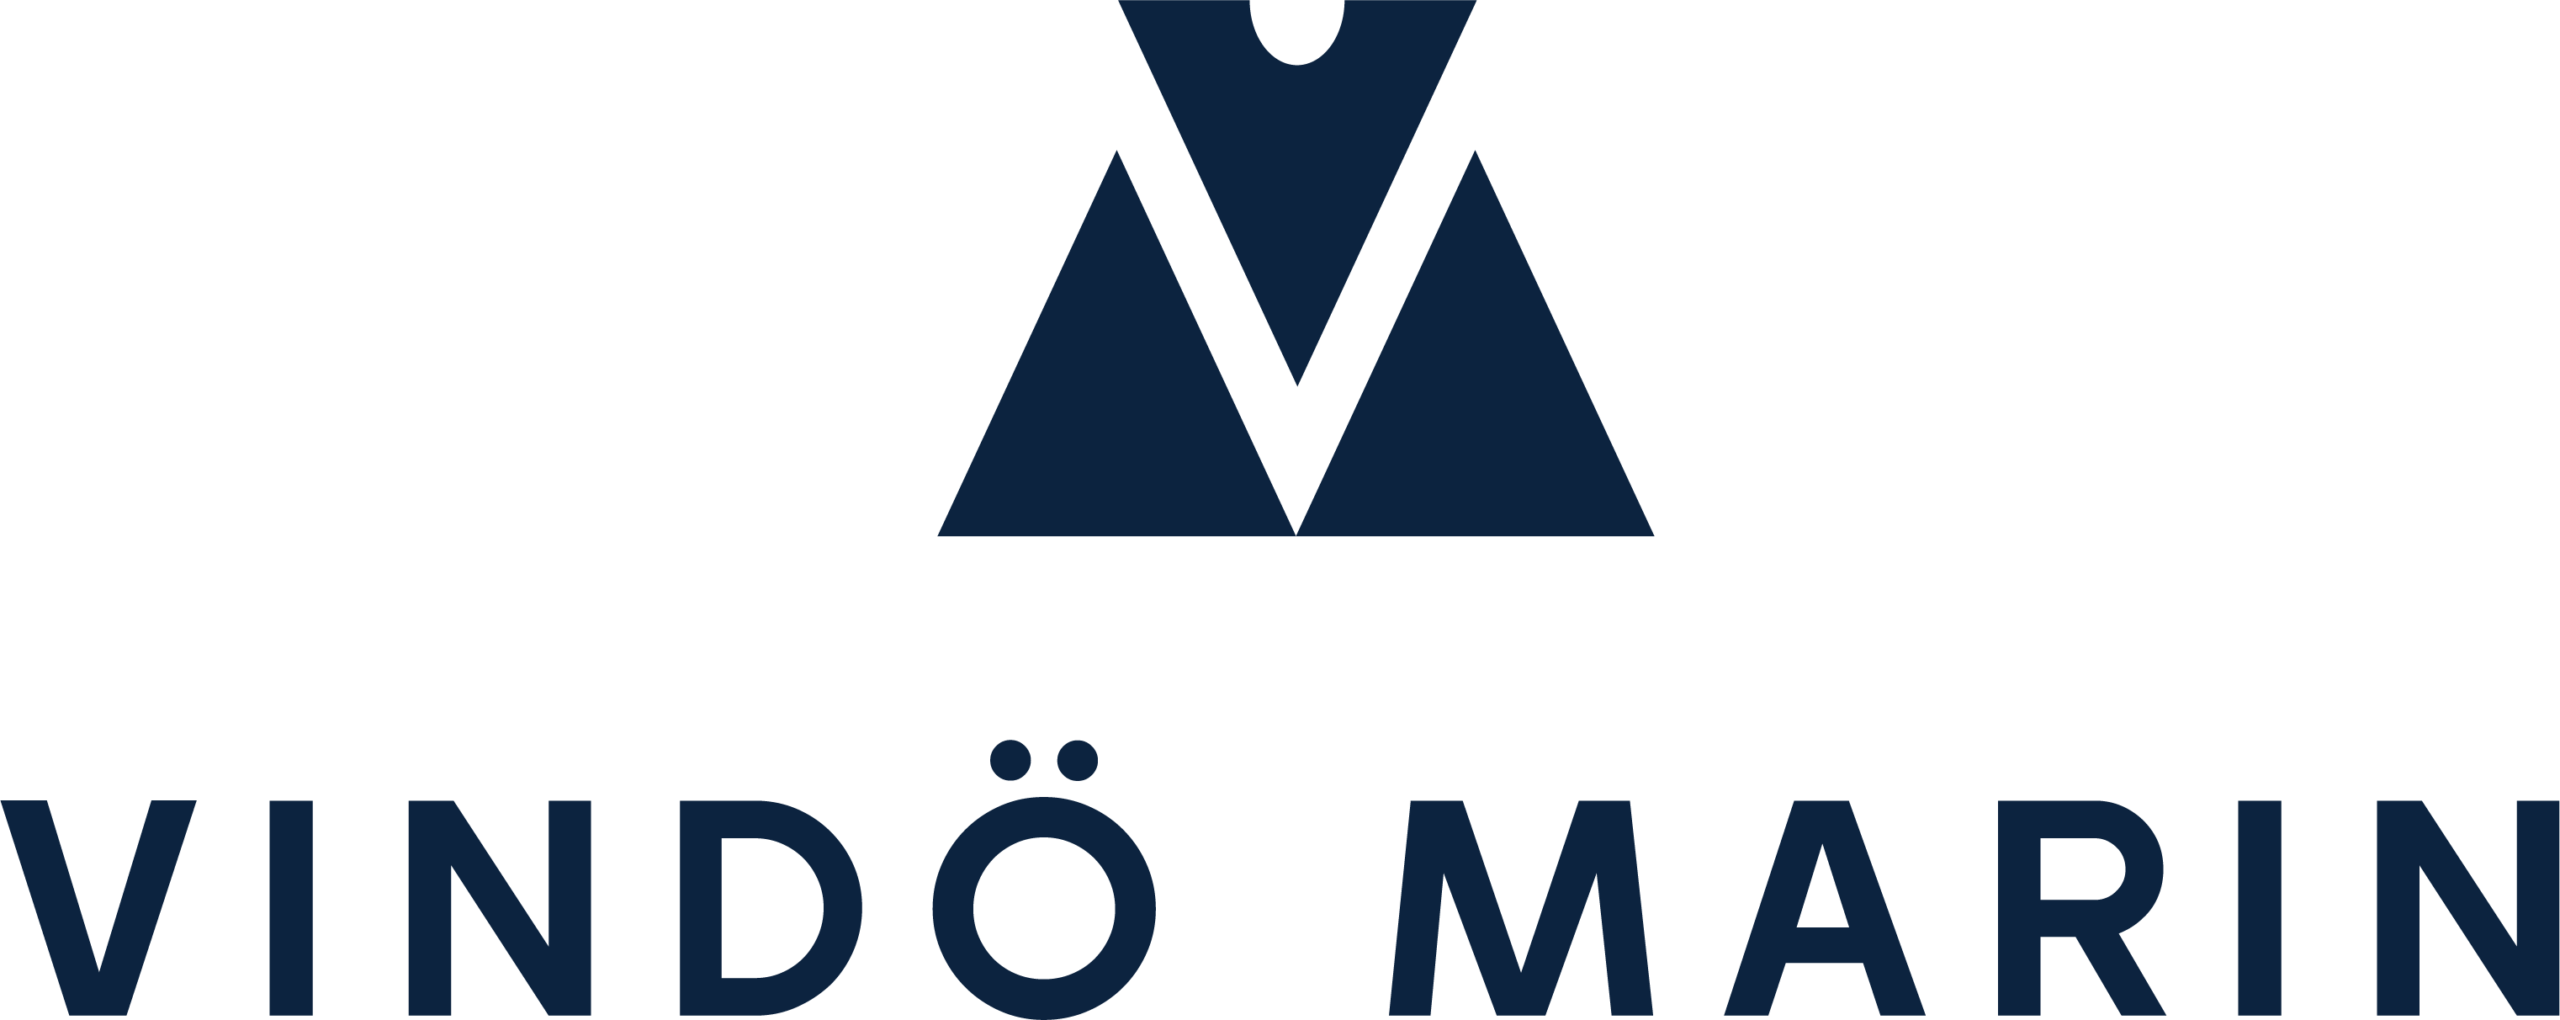 Vindö Logo